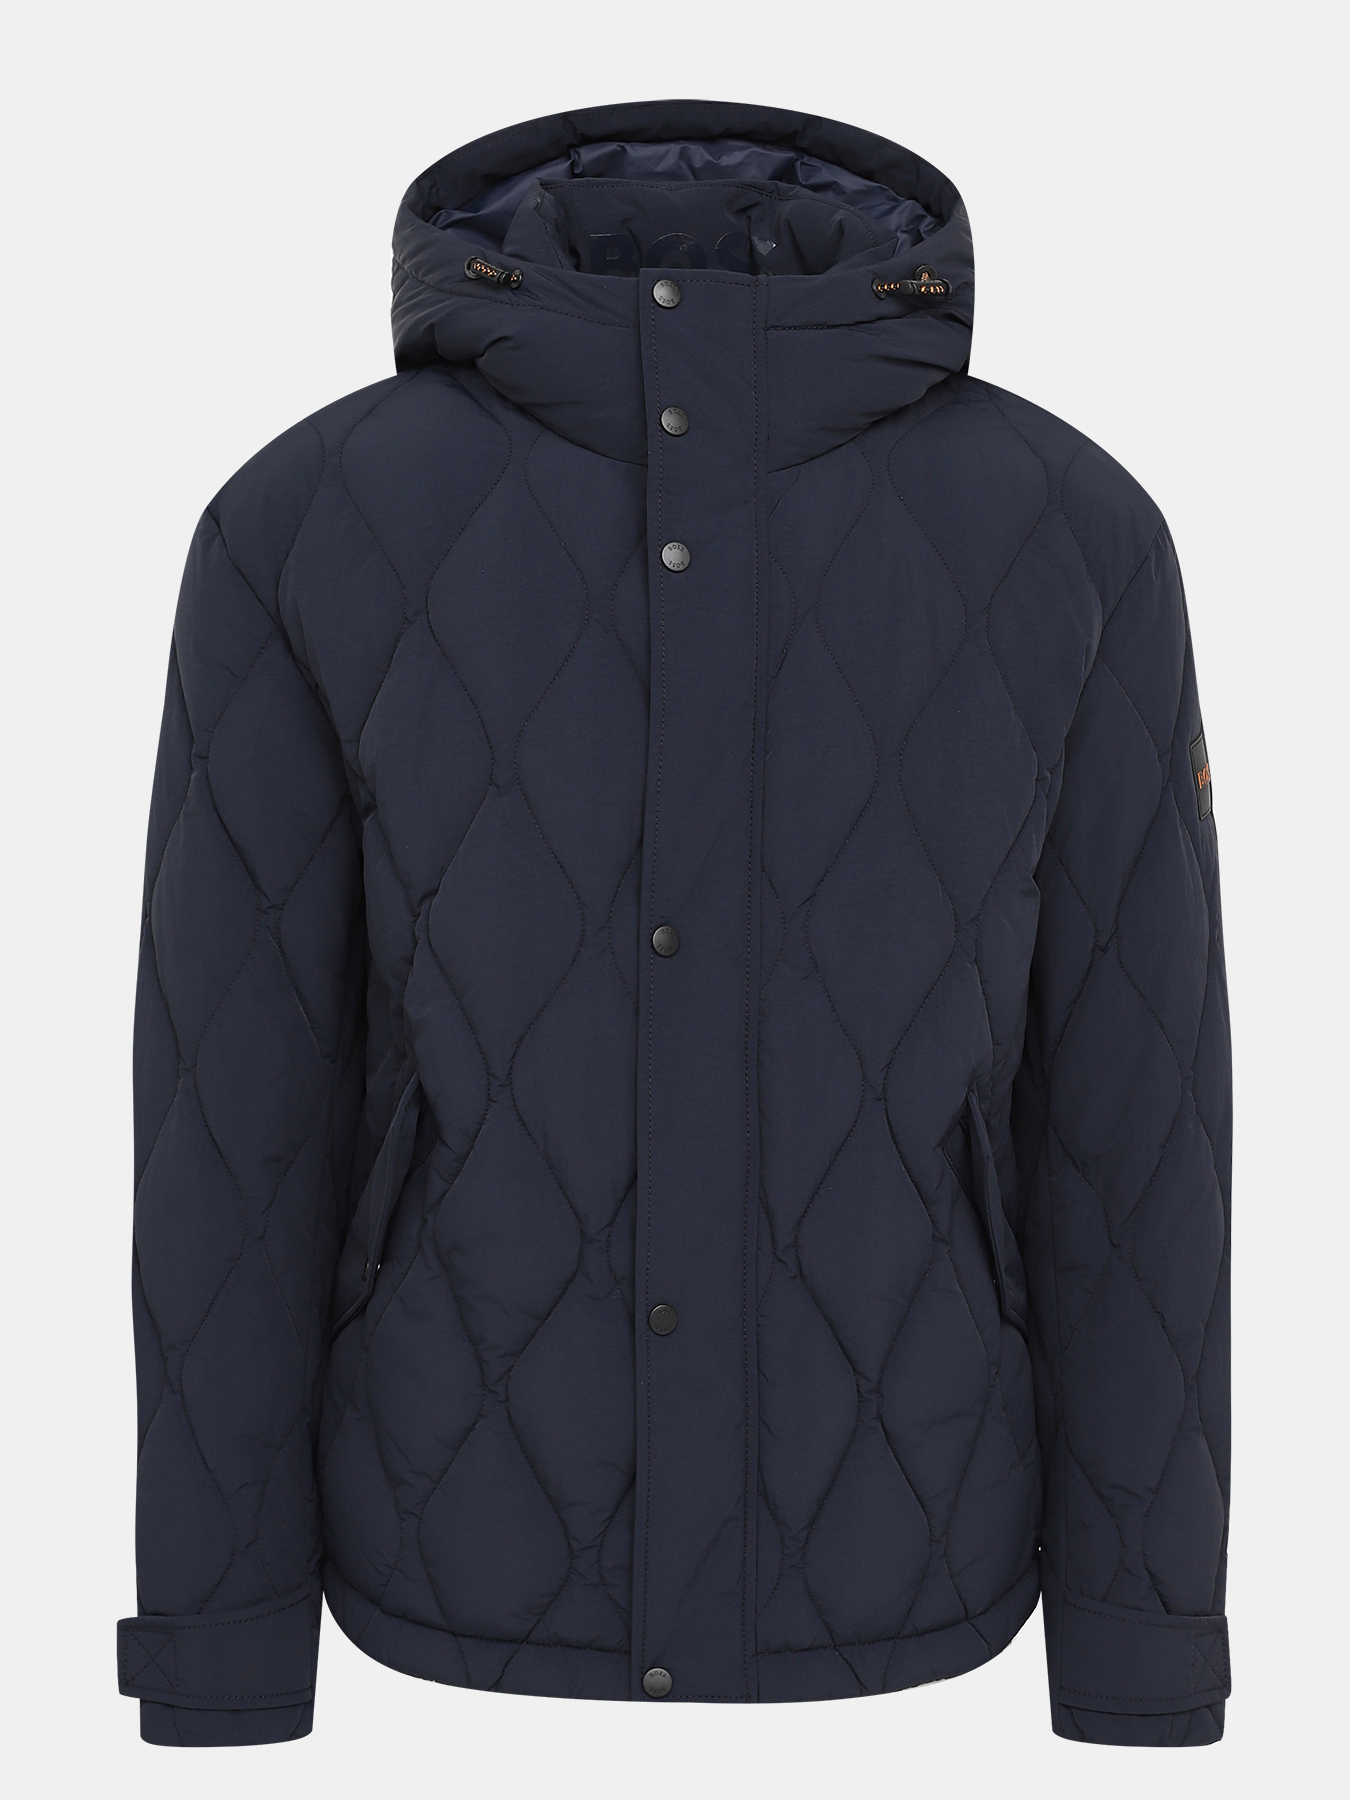 Куртка Onlet BOSS 424685-026, цвет темно-синий, размер 50 - фото 1